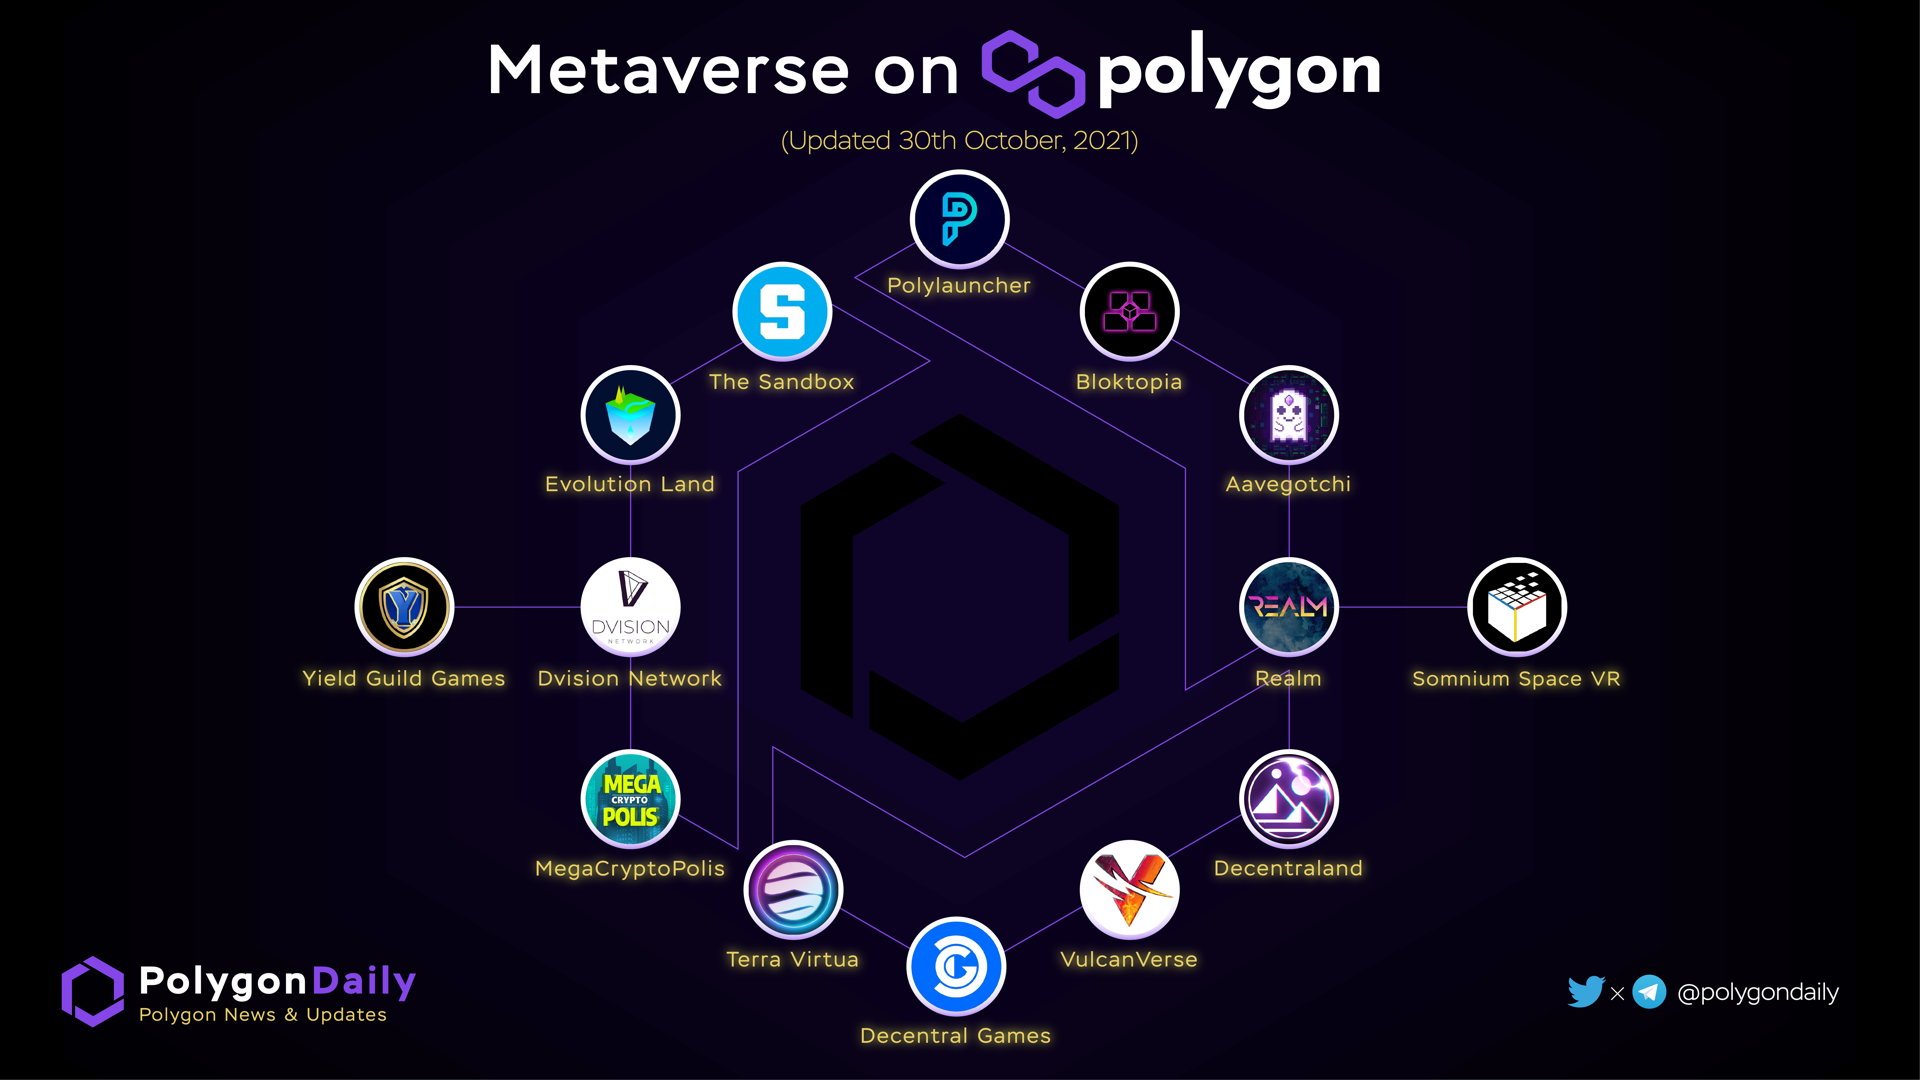 Polygon's Metaverse